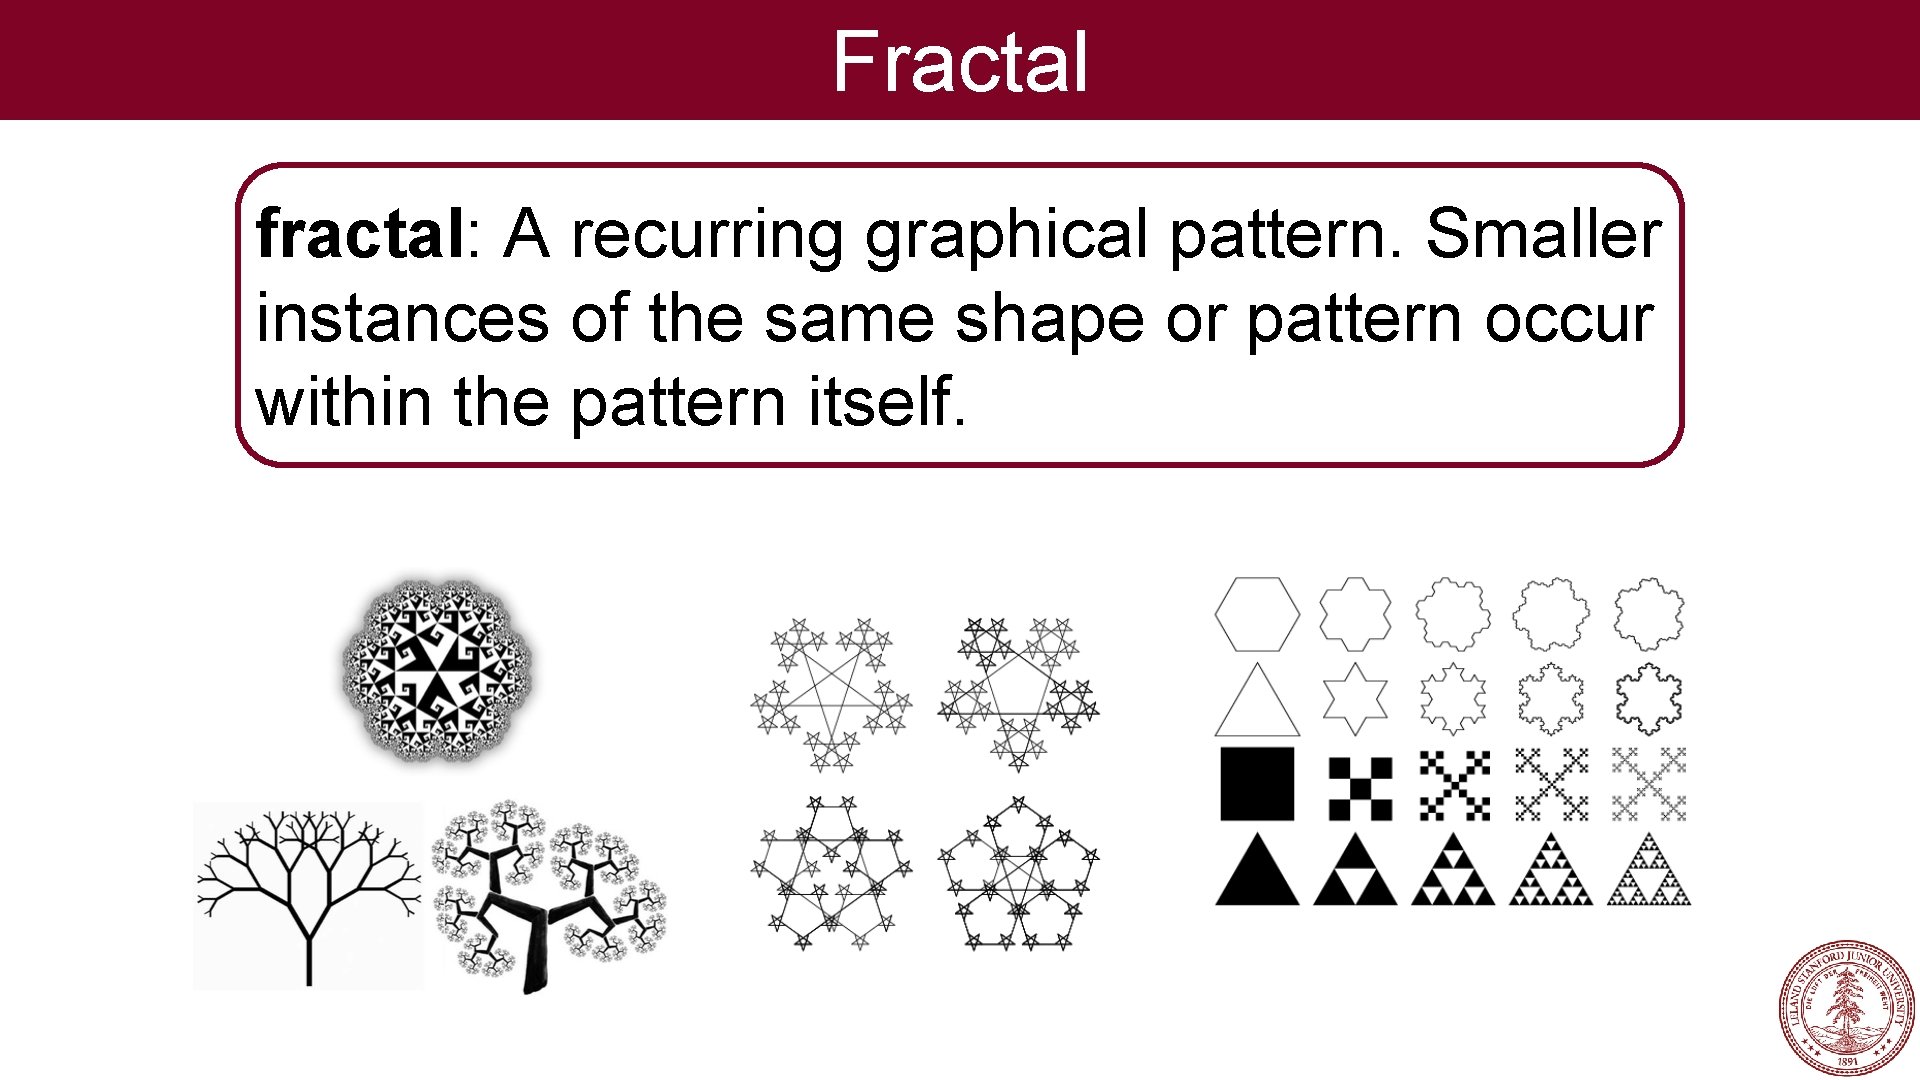 Fractal fractal: A recurring graphical pattern. Smaller instances of the same shape or pattern